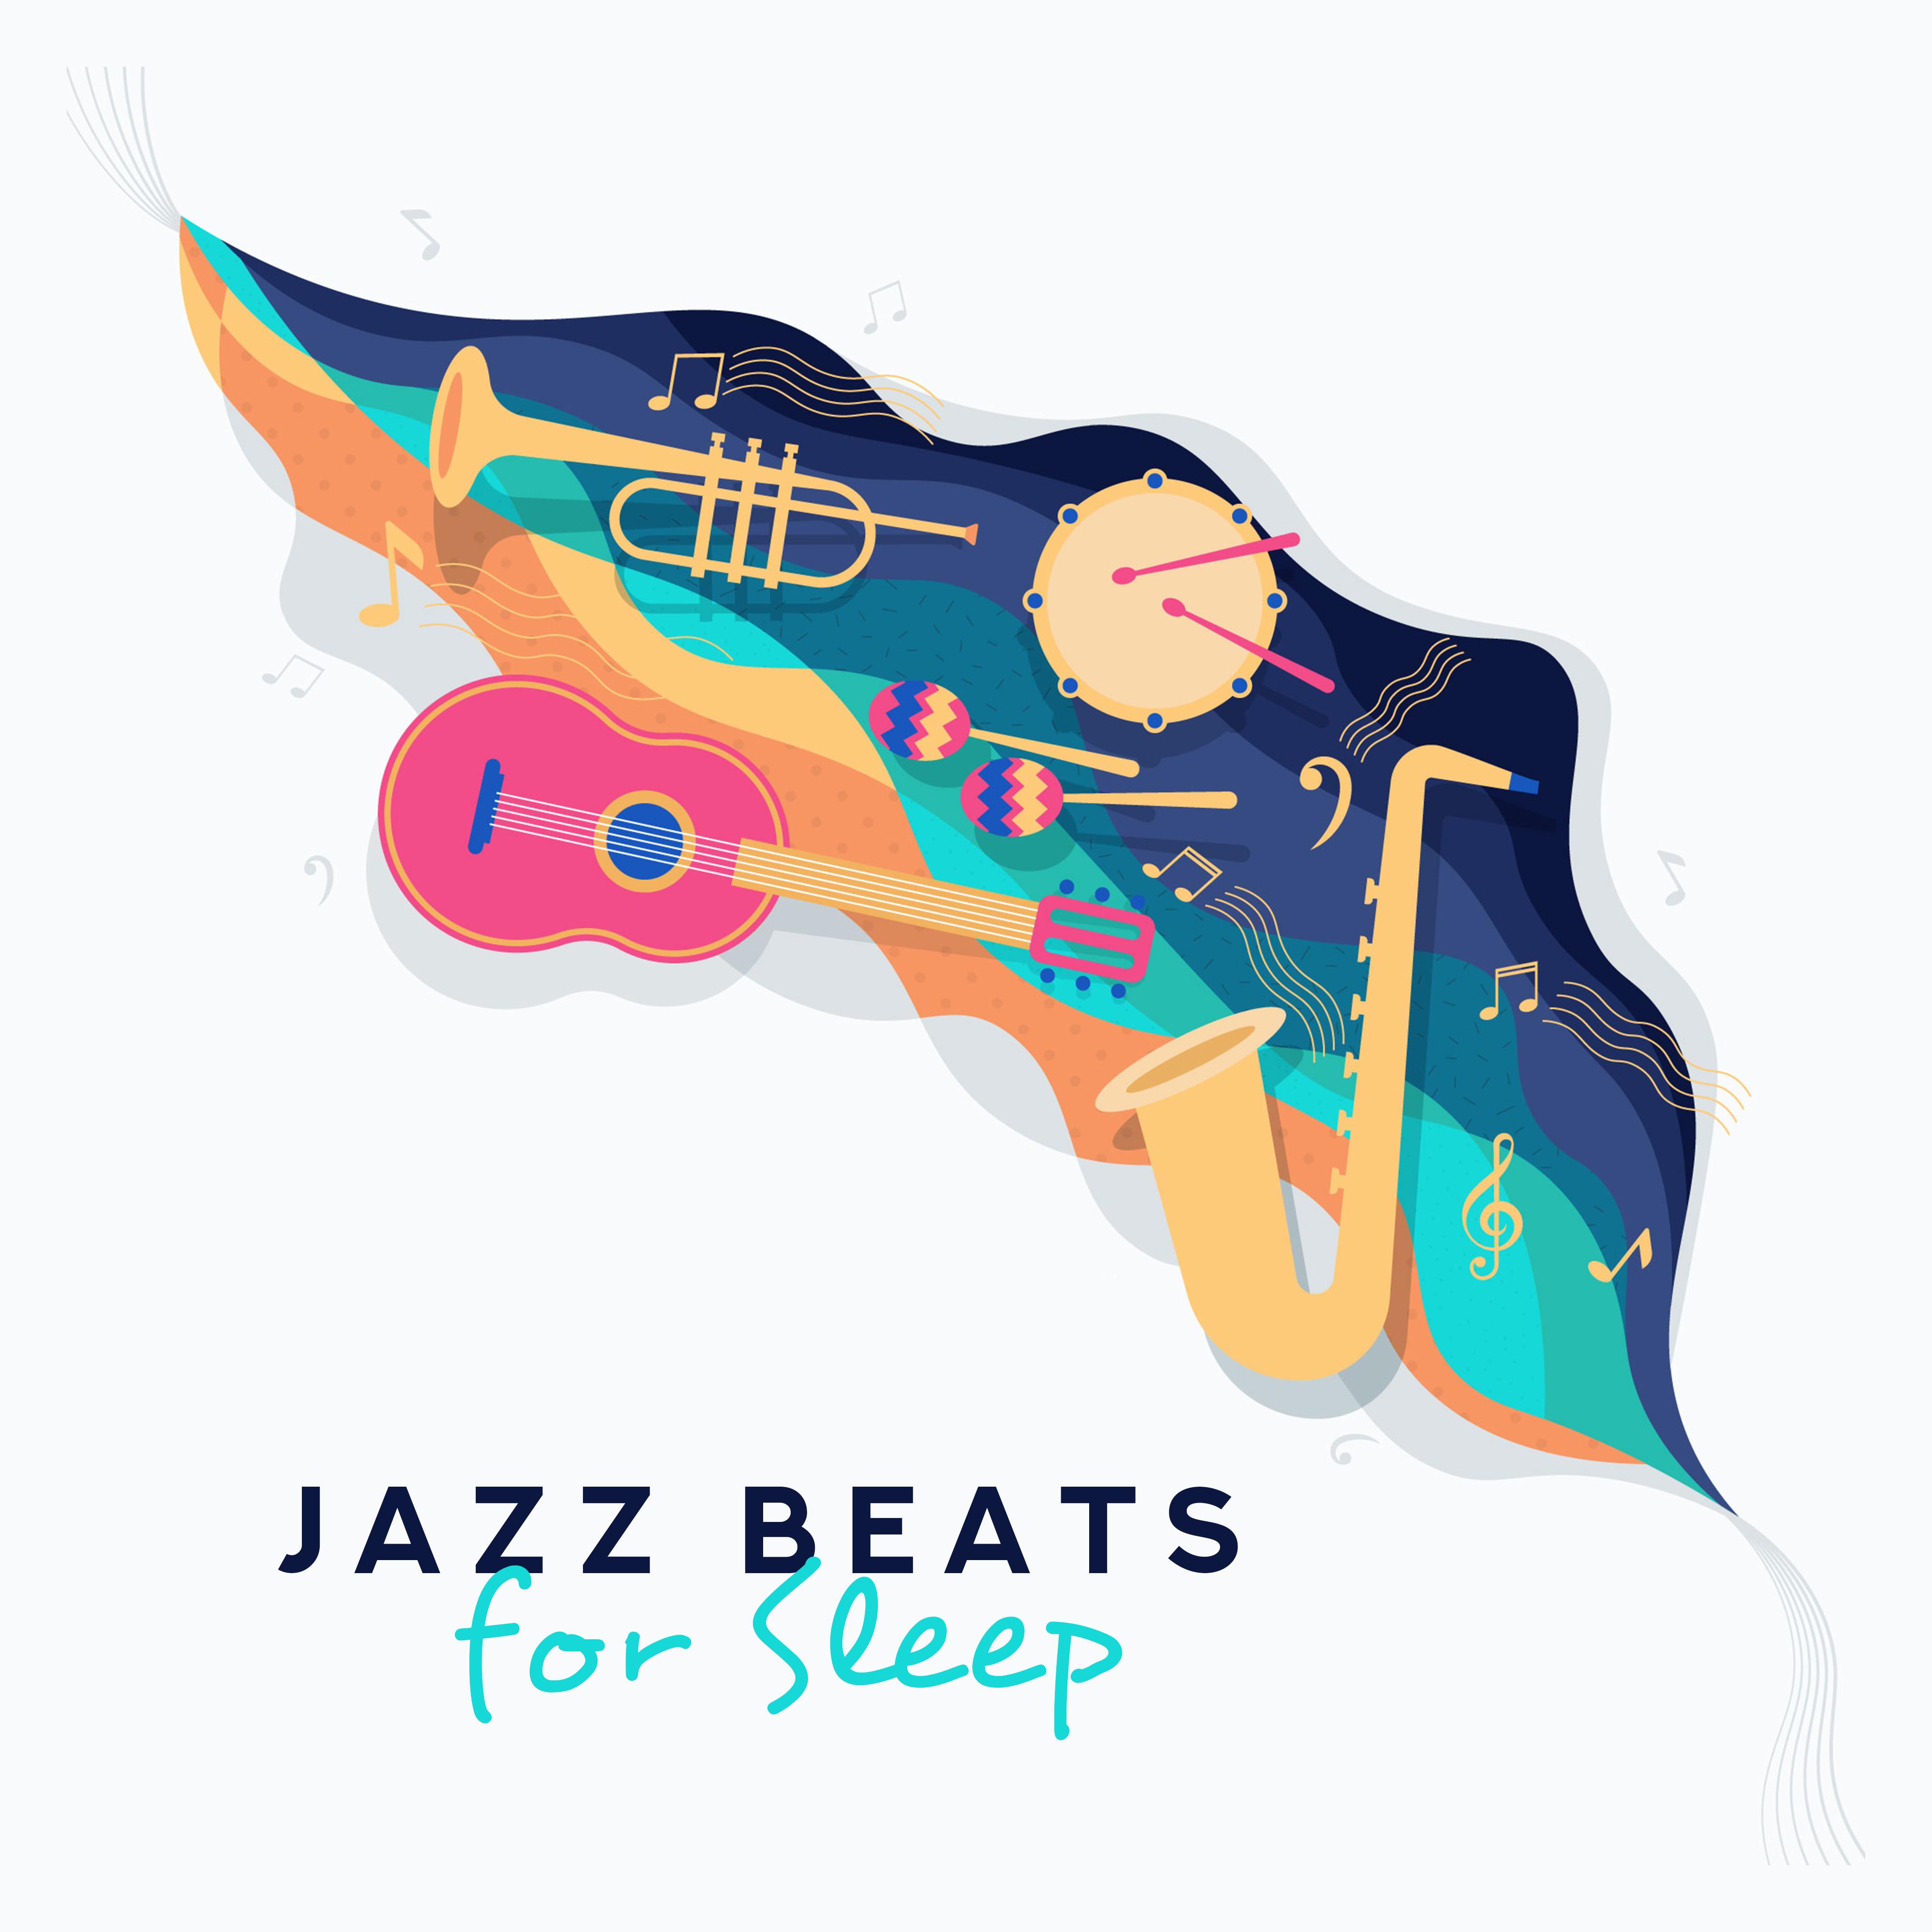 Jazz Beats for Sleep – Calming Jazz at Night, Jazz Lullabies, Instrumental Jazz Music Ambient, Calm Sleep, Night Jazz, Jazz Lounge